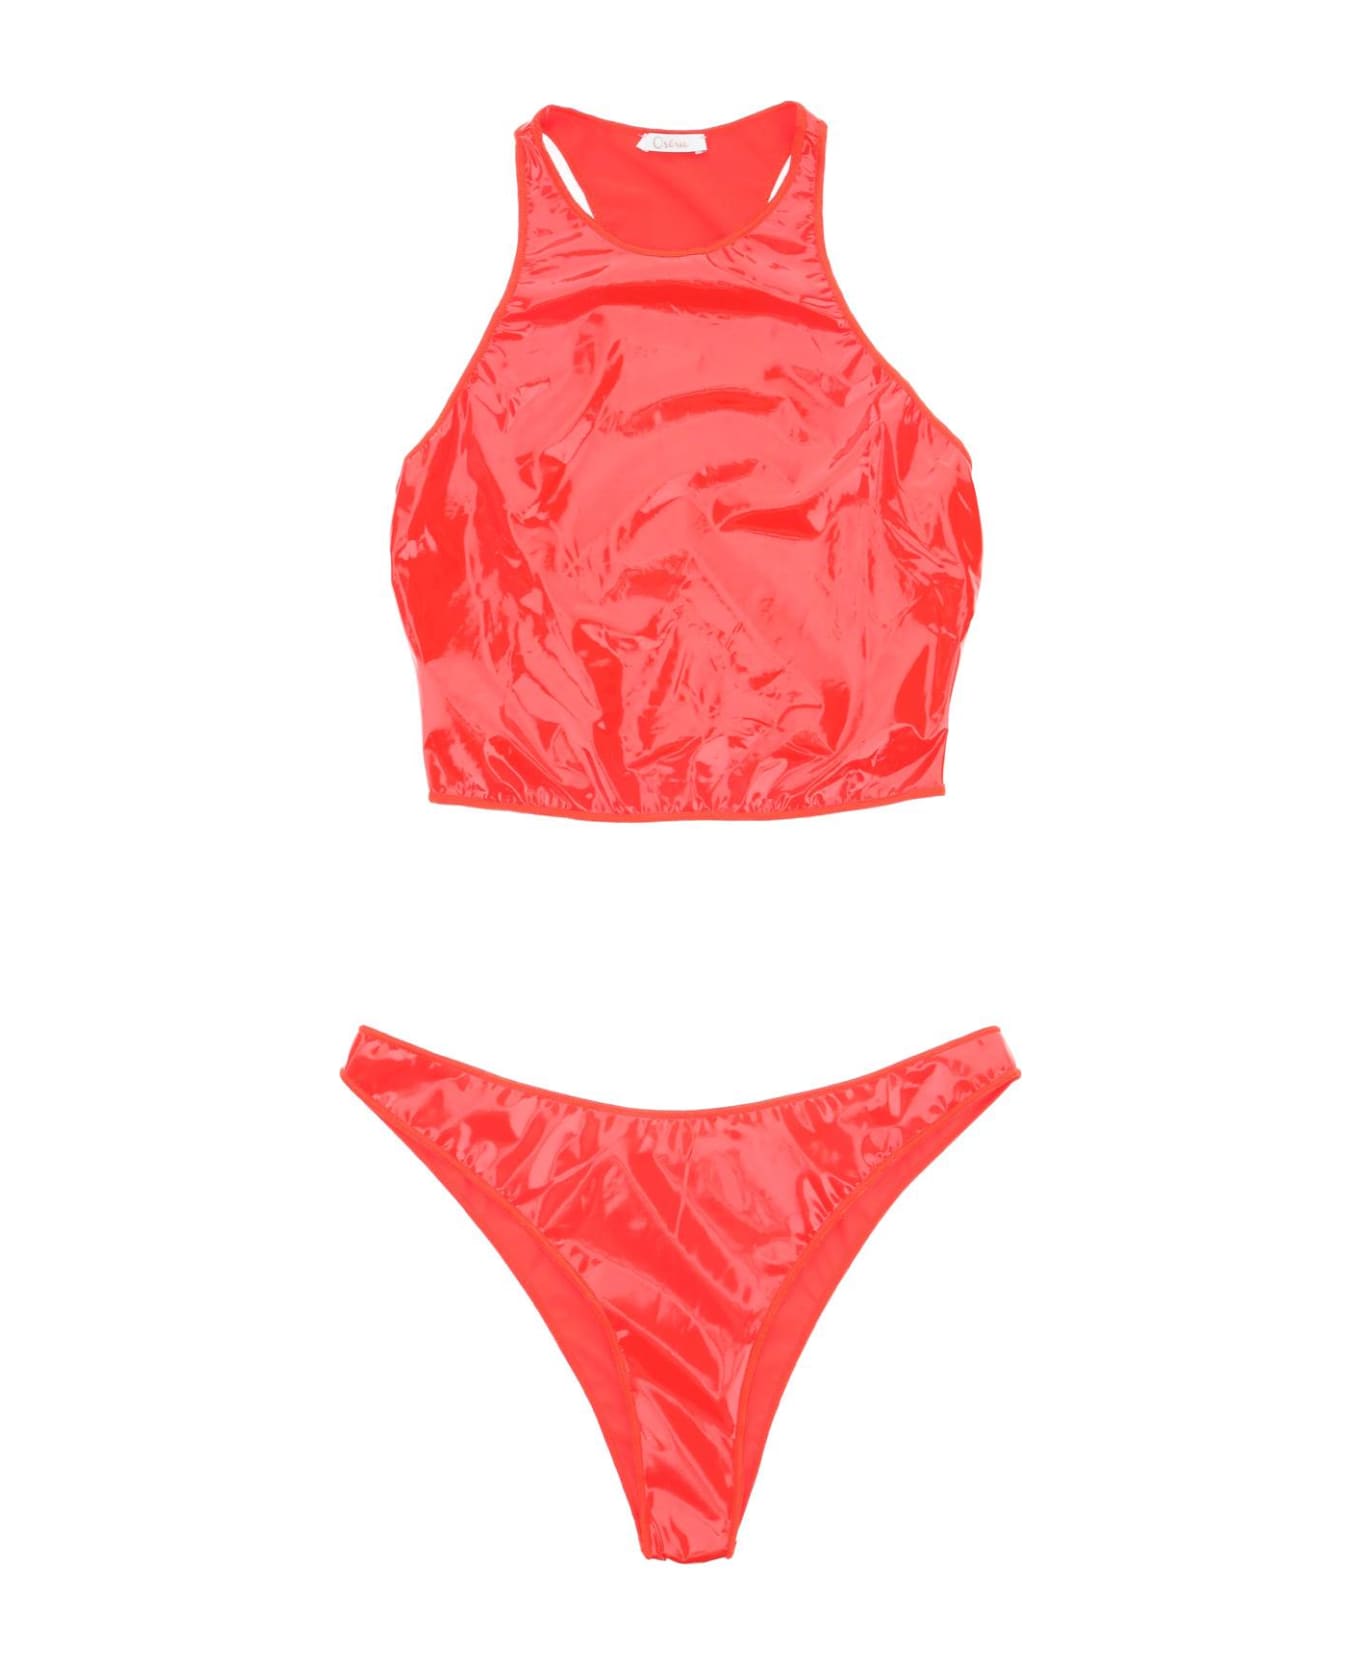 Oseree Latex Bikini Set - RED (Red)